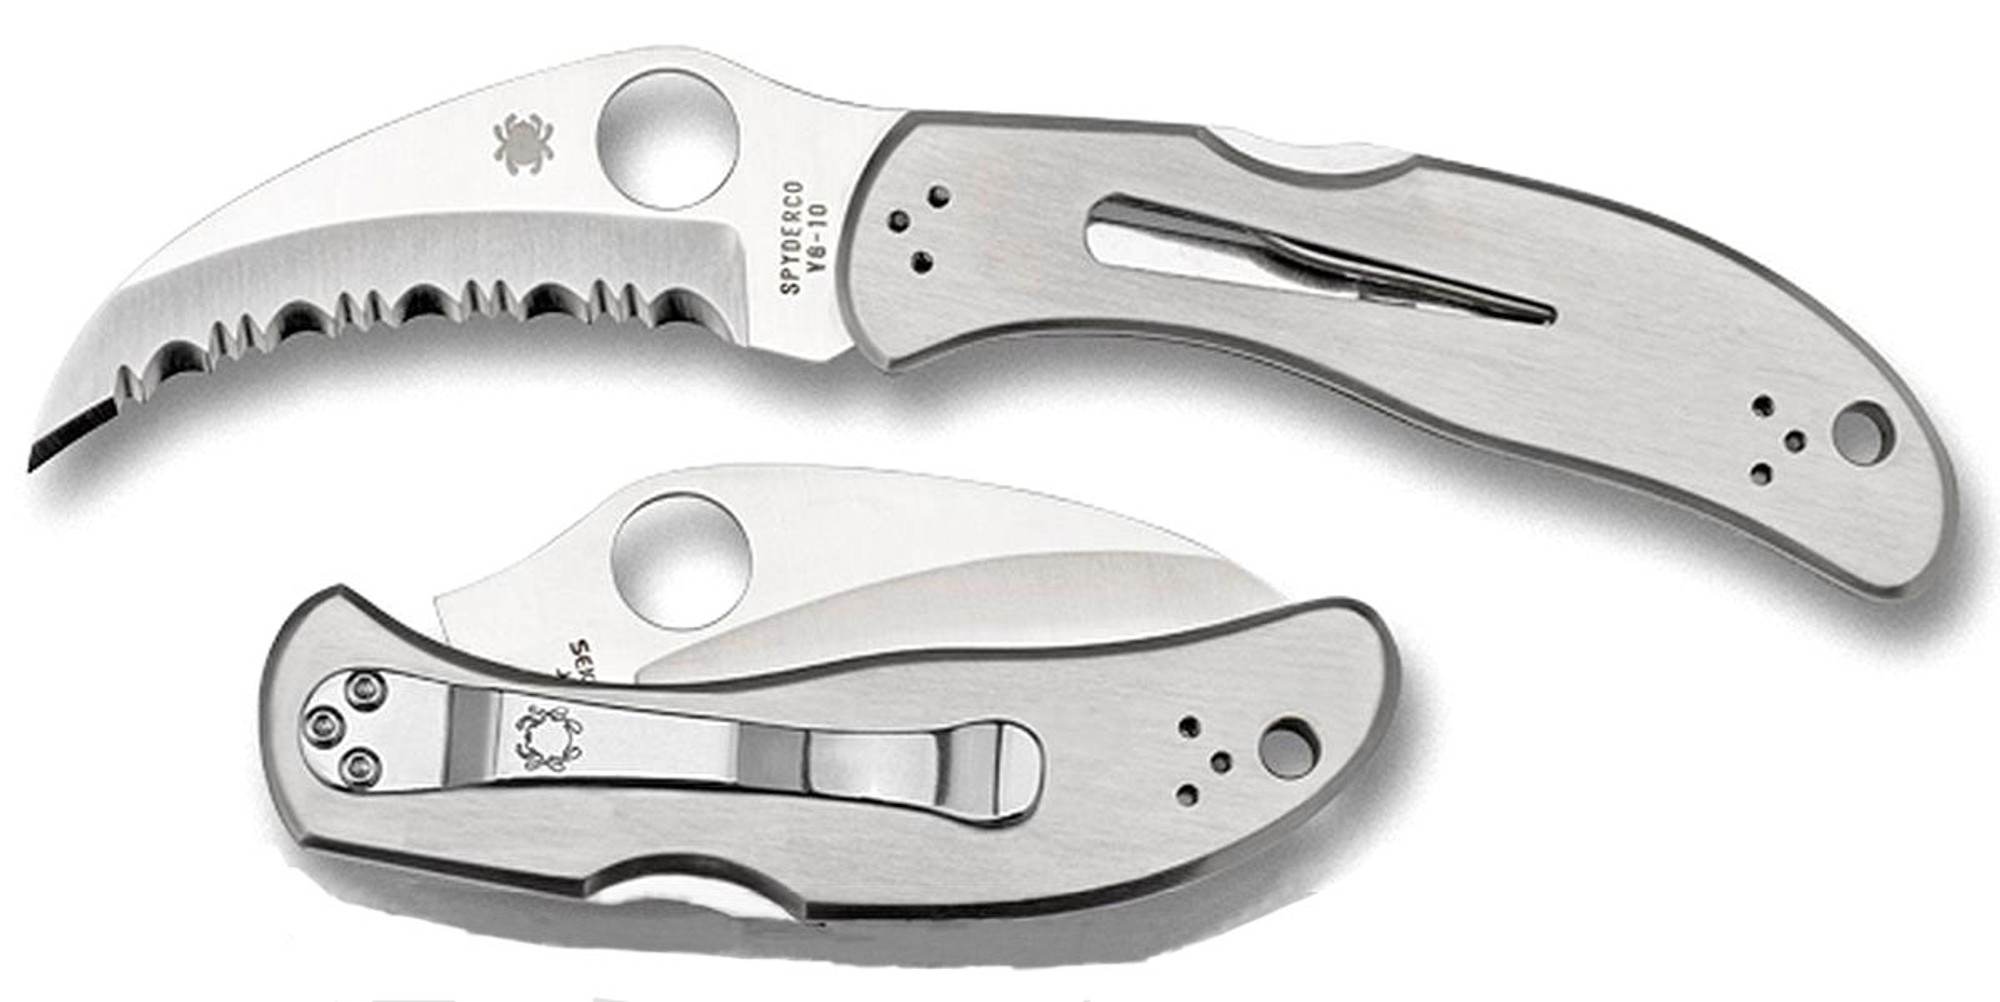 Spyderco Harpy 2.75" Lockback Stainless Steel Folding Knife - Full Serrations